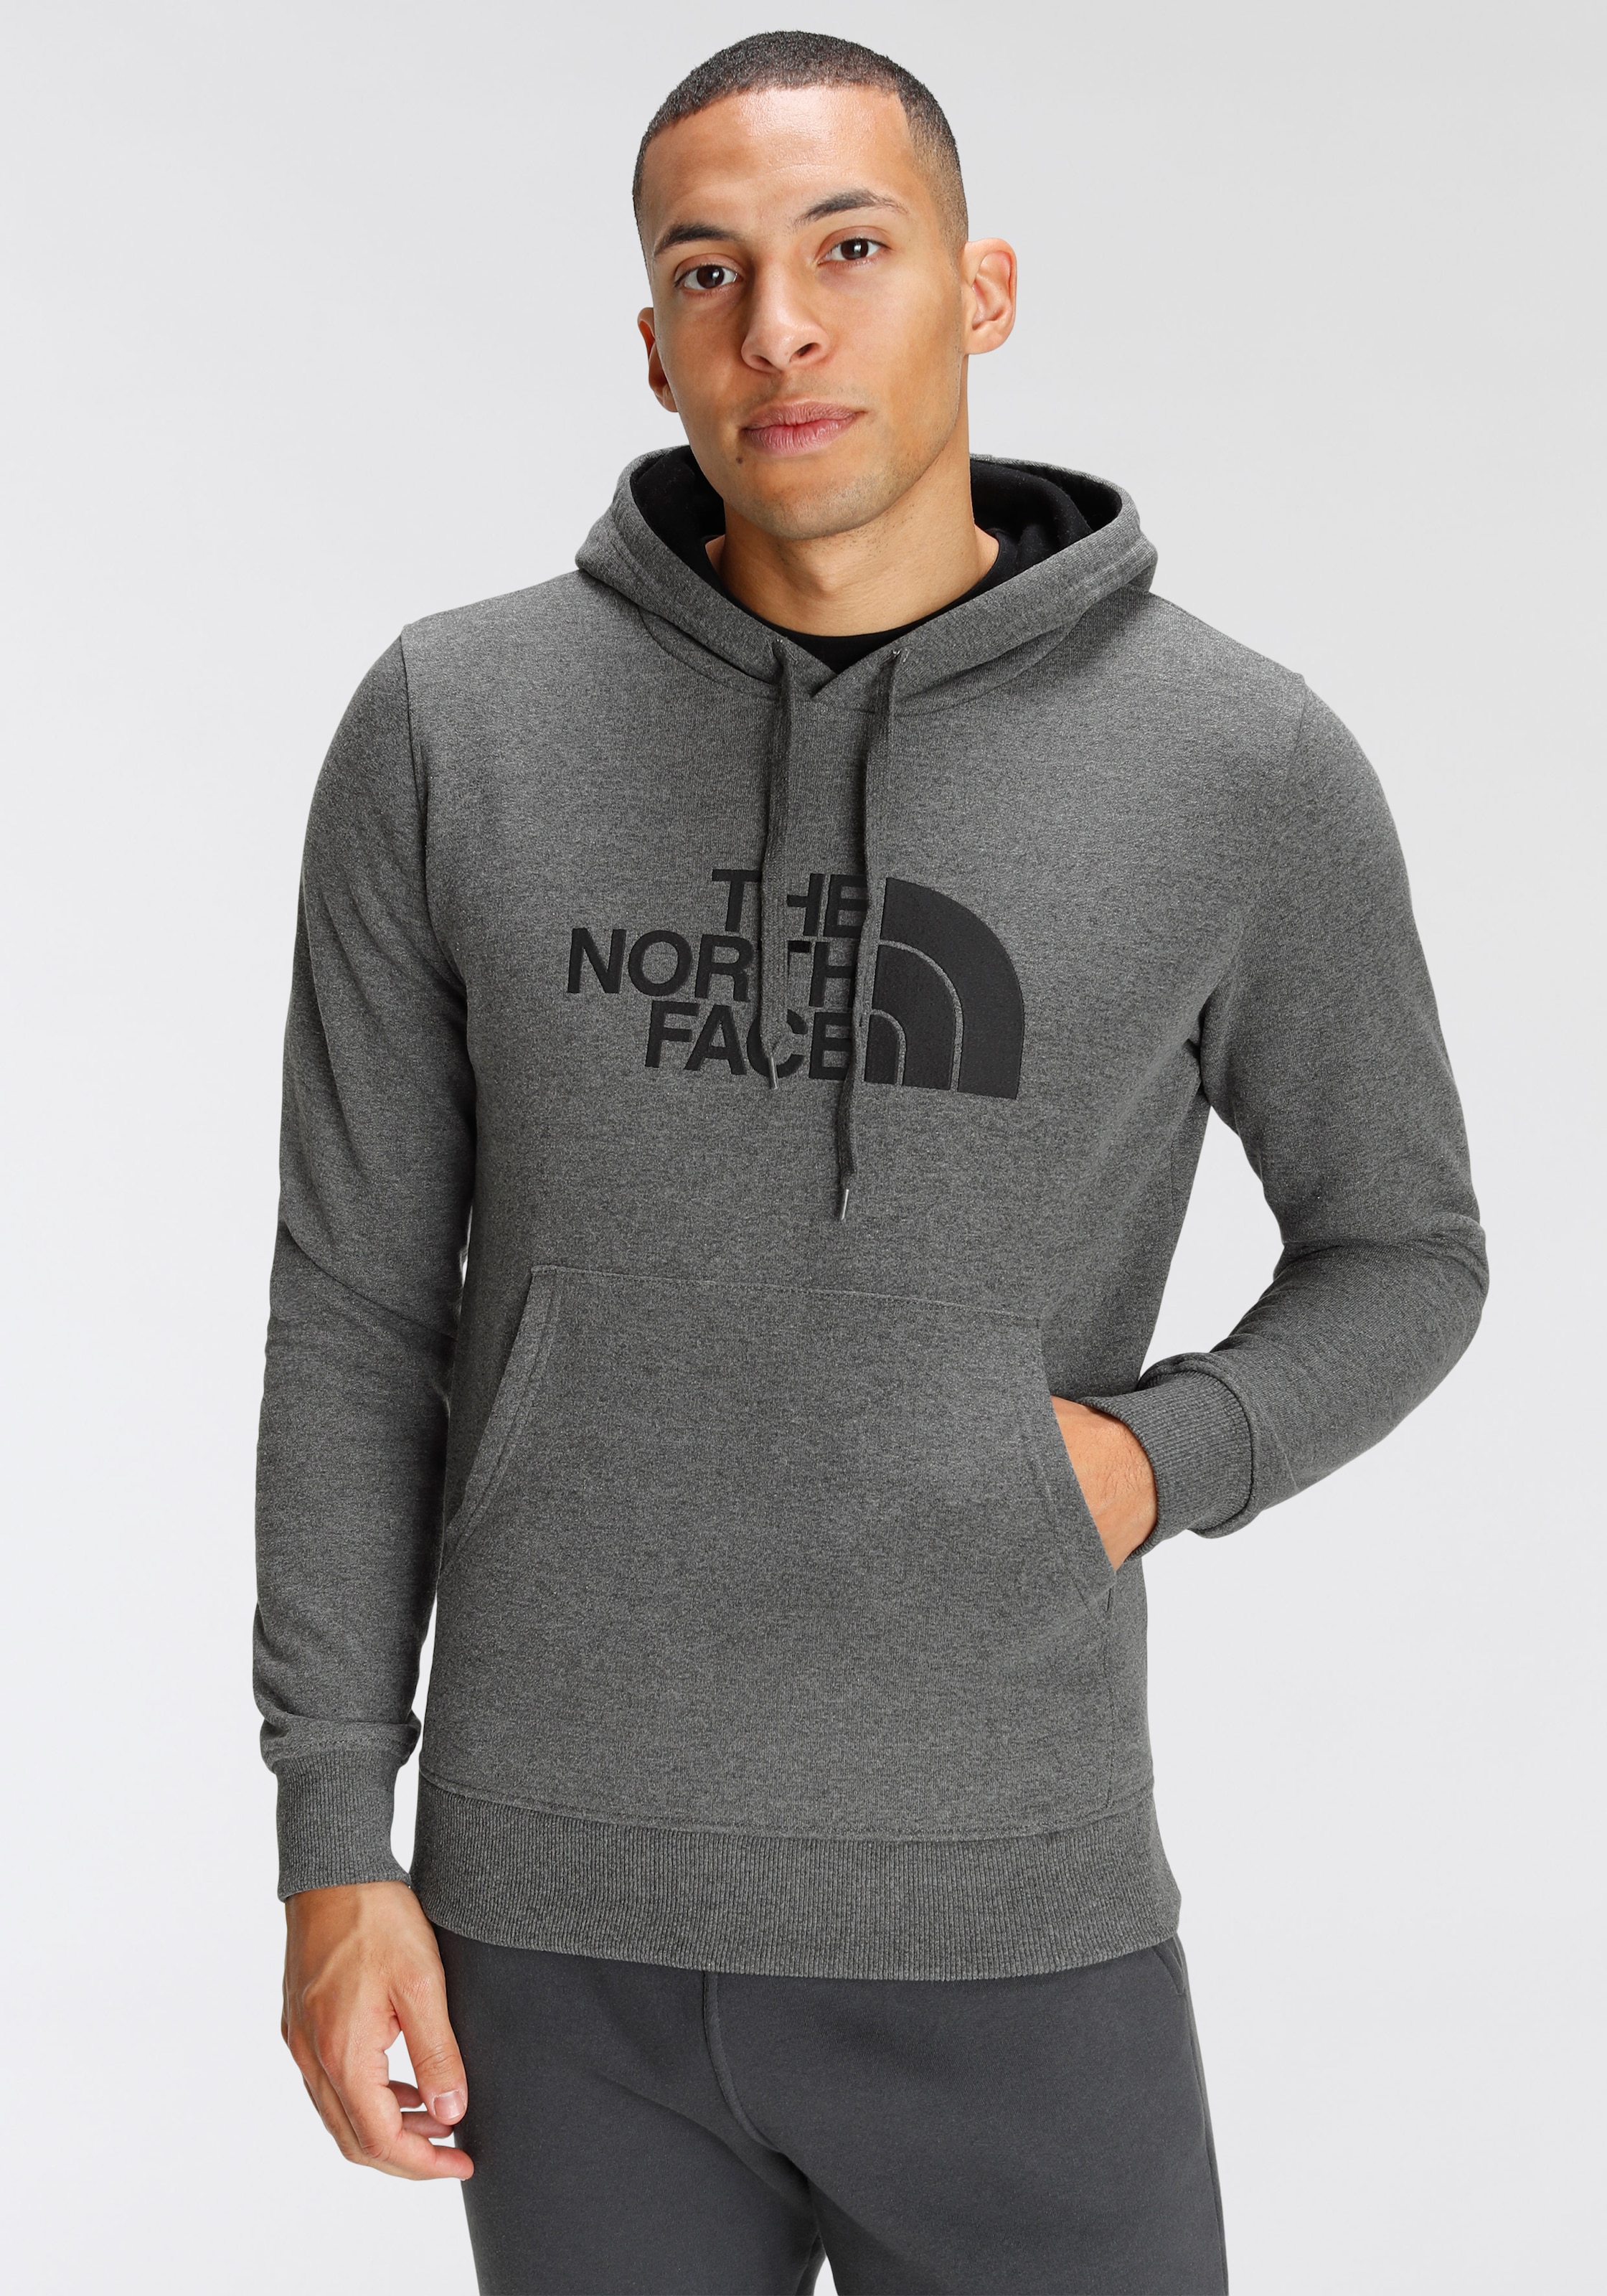 The North Face OTTO shoppen bei Kapuzenpullover »DREW PEAK« online